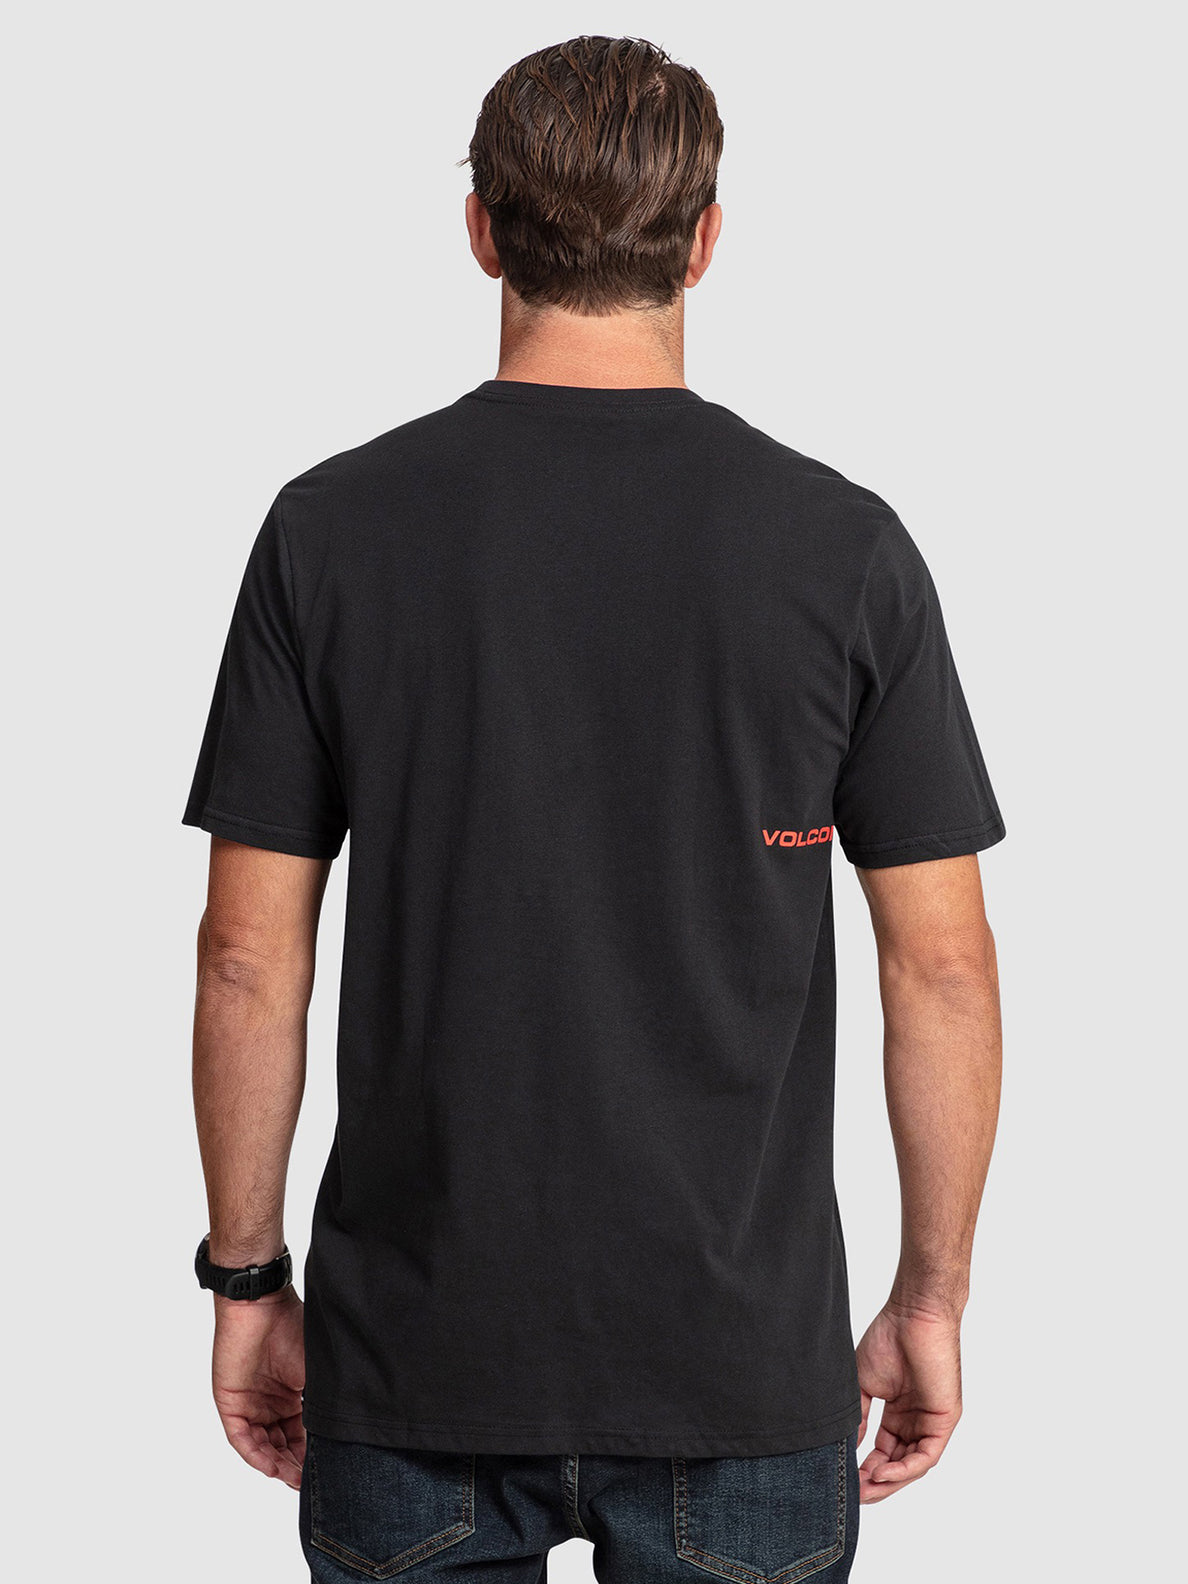 Mini Circle Stone Short Sleeve T-Shirt - Black (A4302301_BLK) [B]